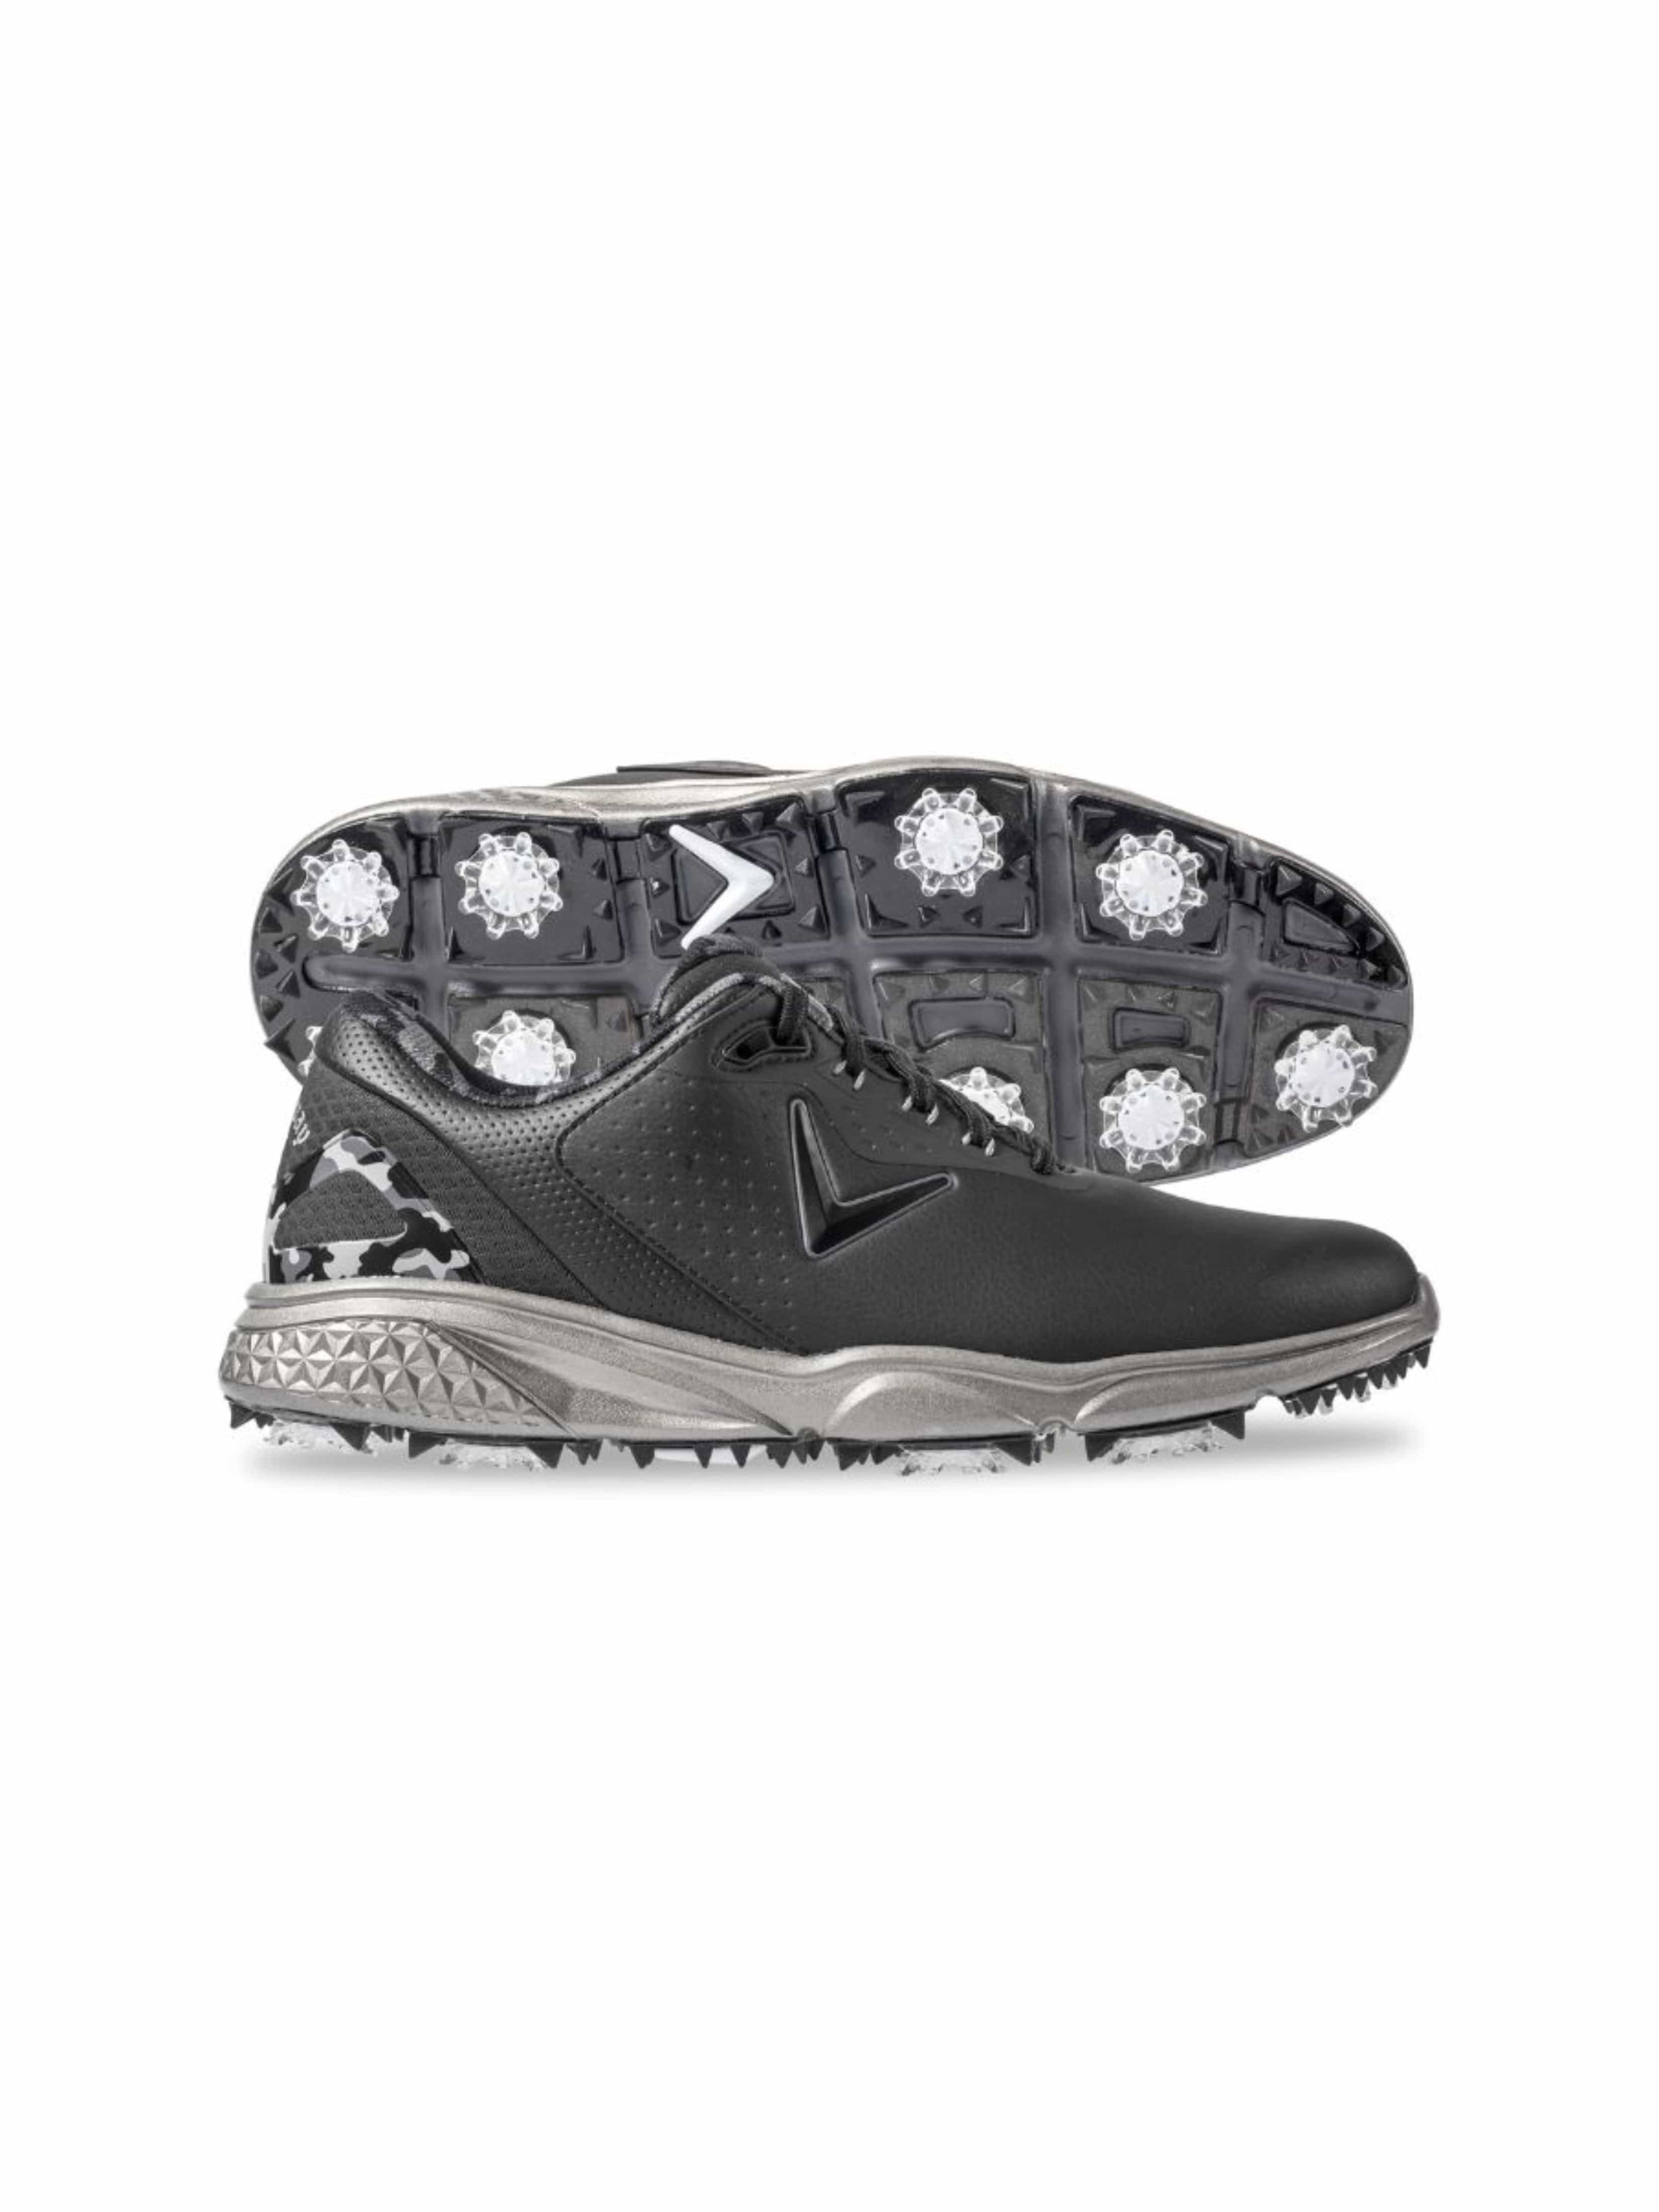 Callaway Apparel Mens Coronado V2 Golf Shoes, Size 9, Black, Polyurethane/Nylon | Golf Apparel Shop